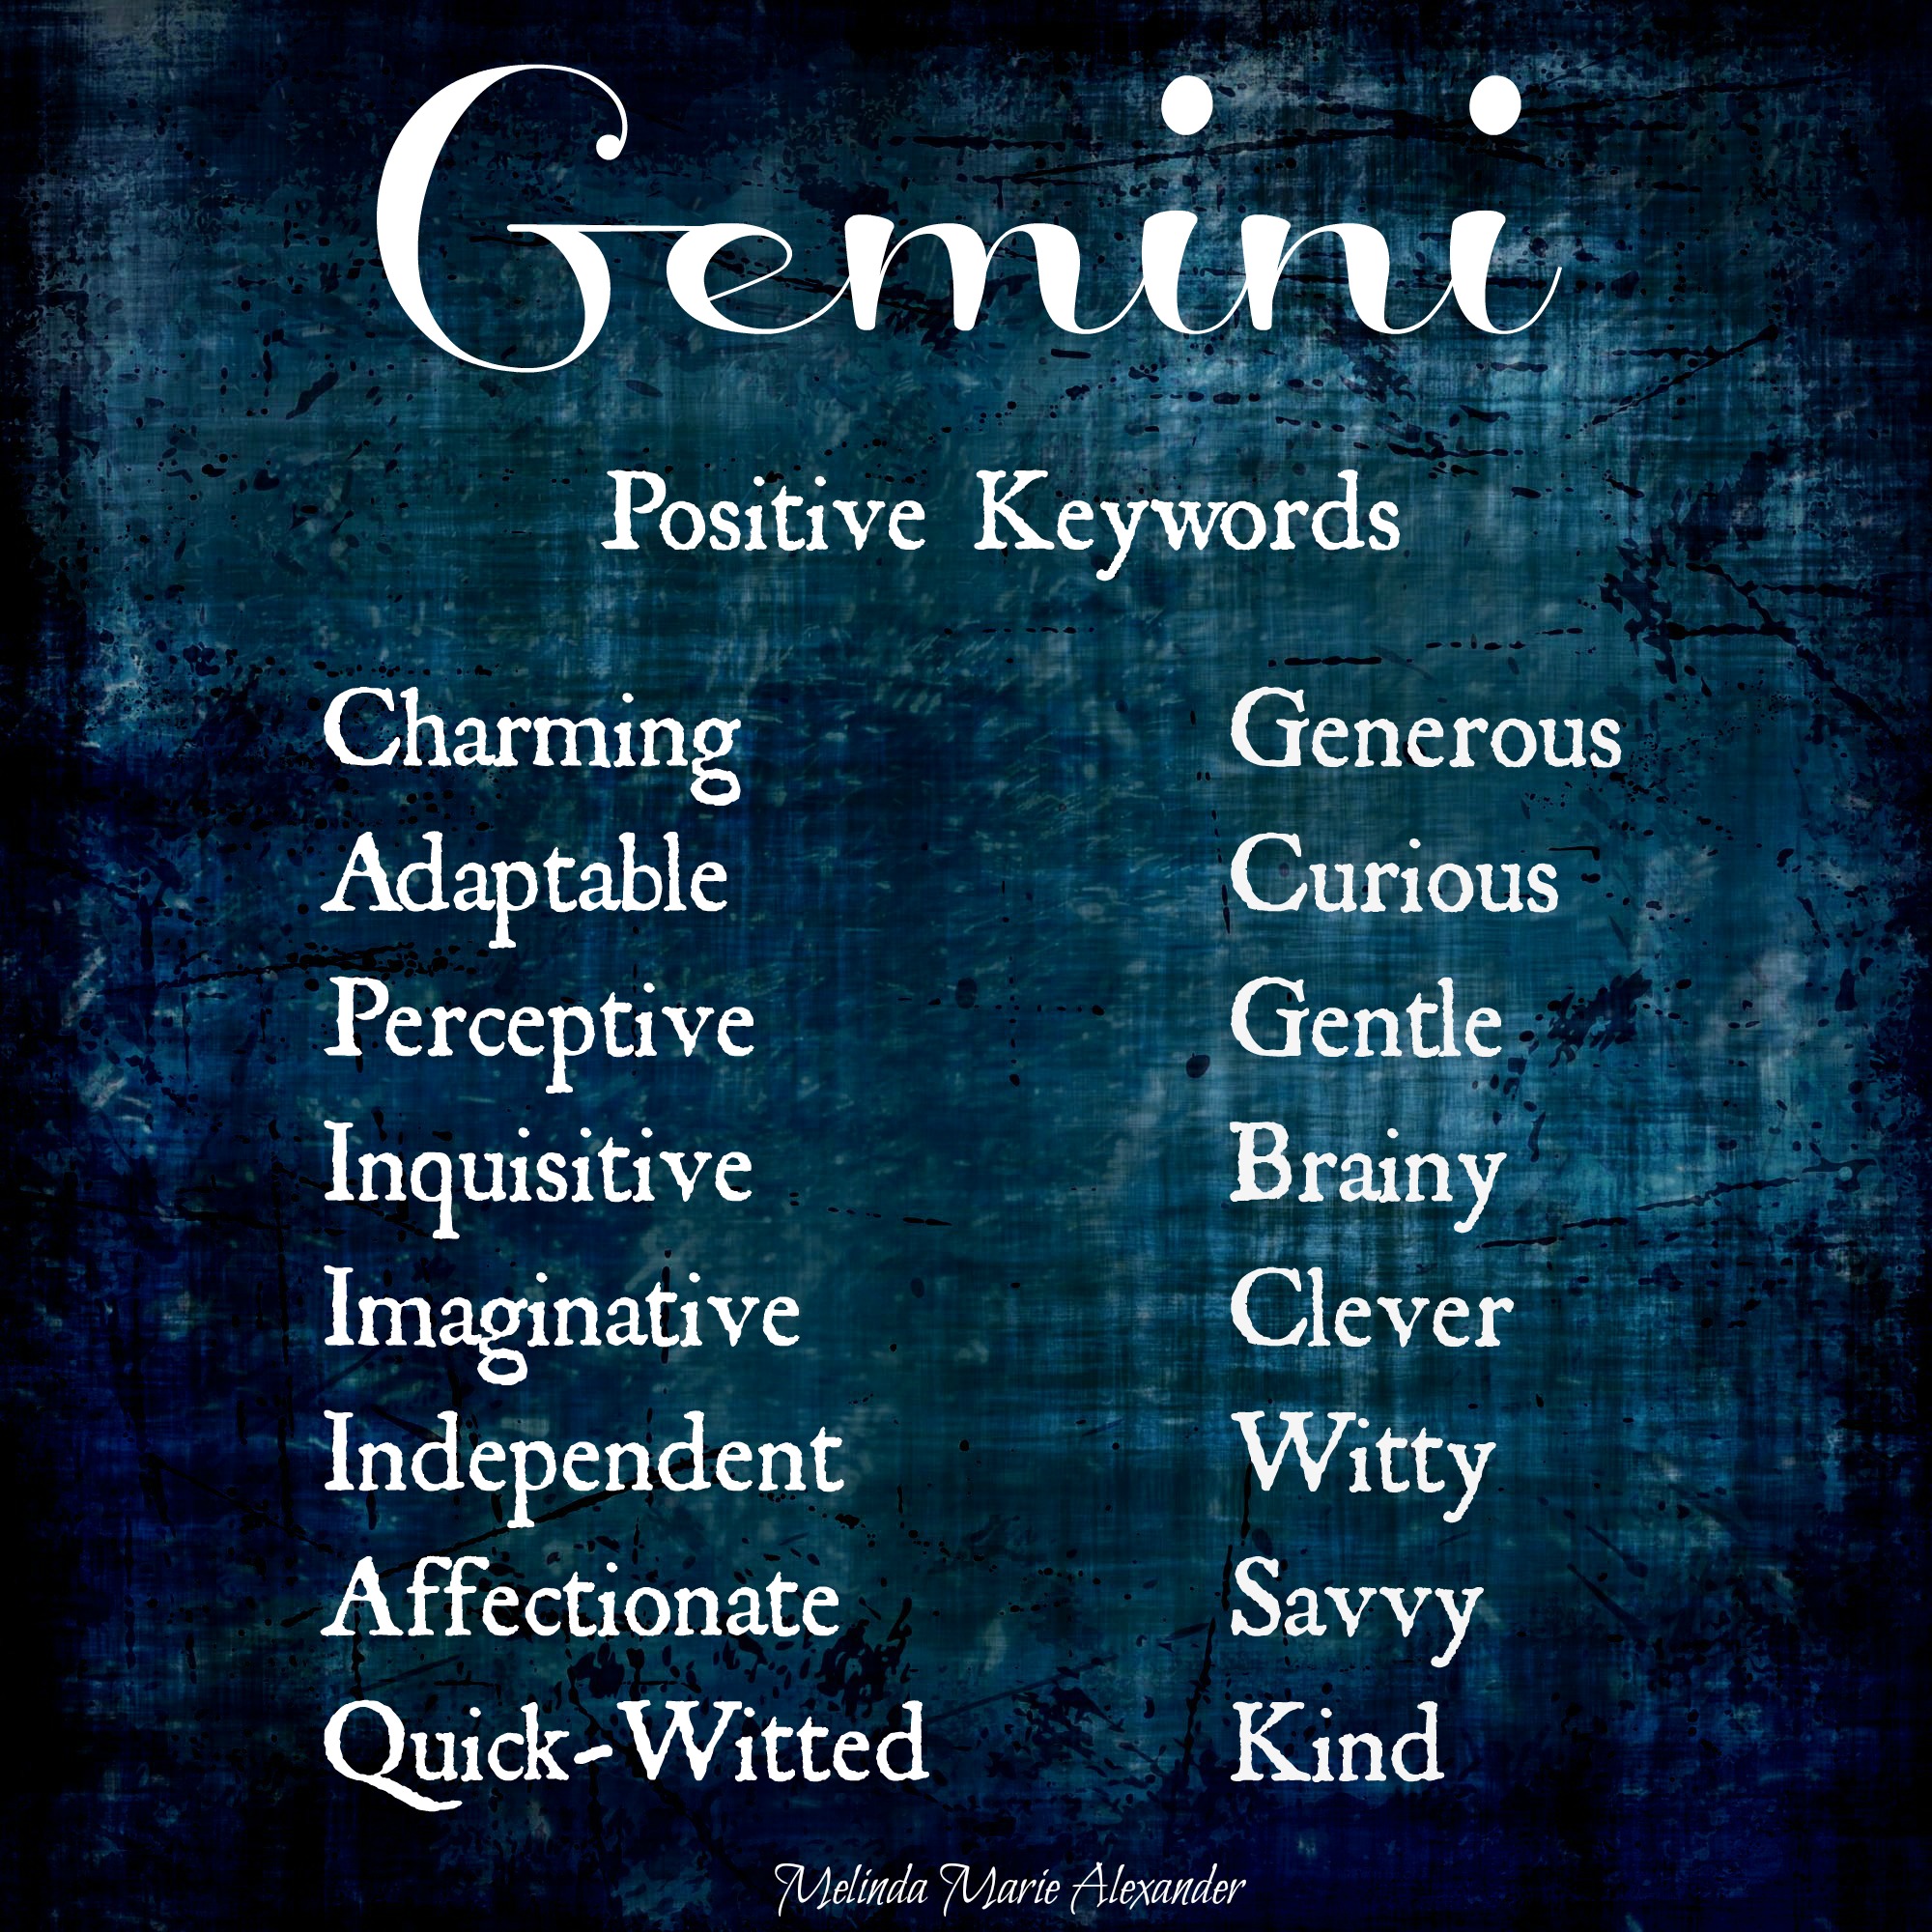 gemini woman bad traits